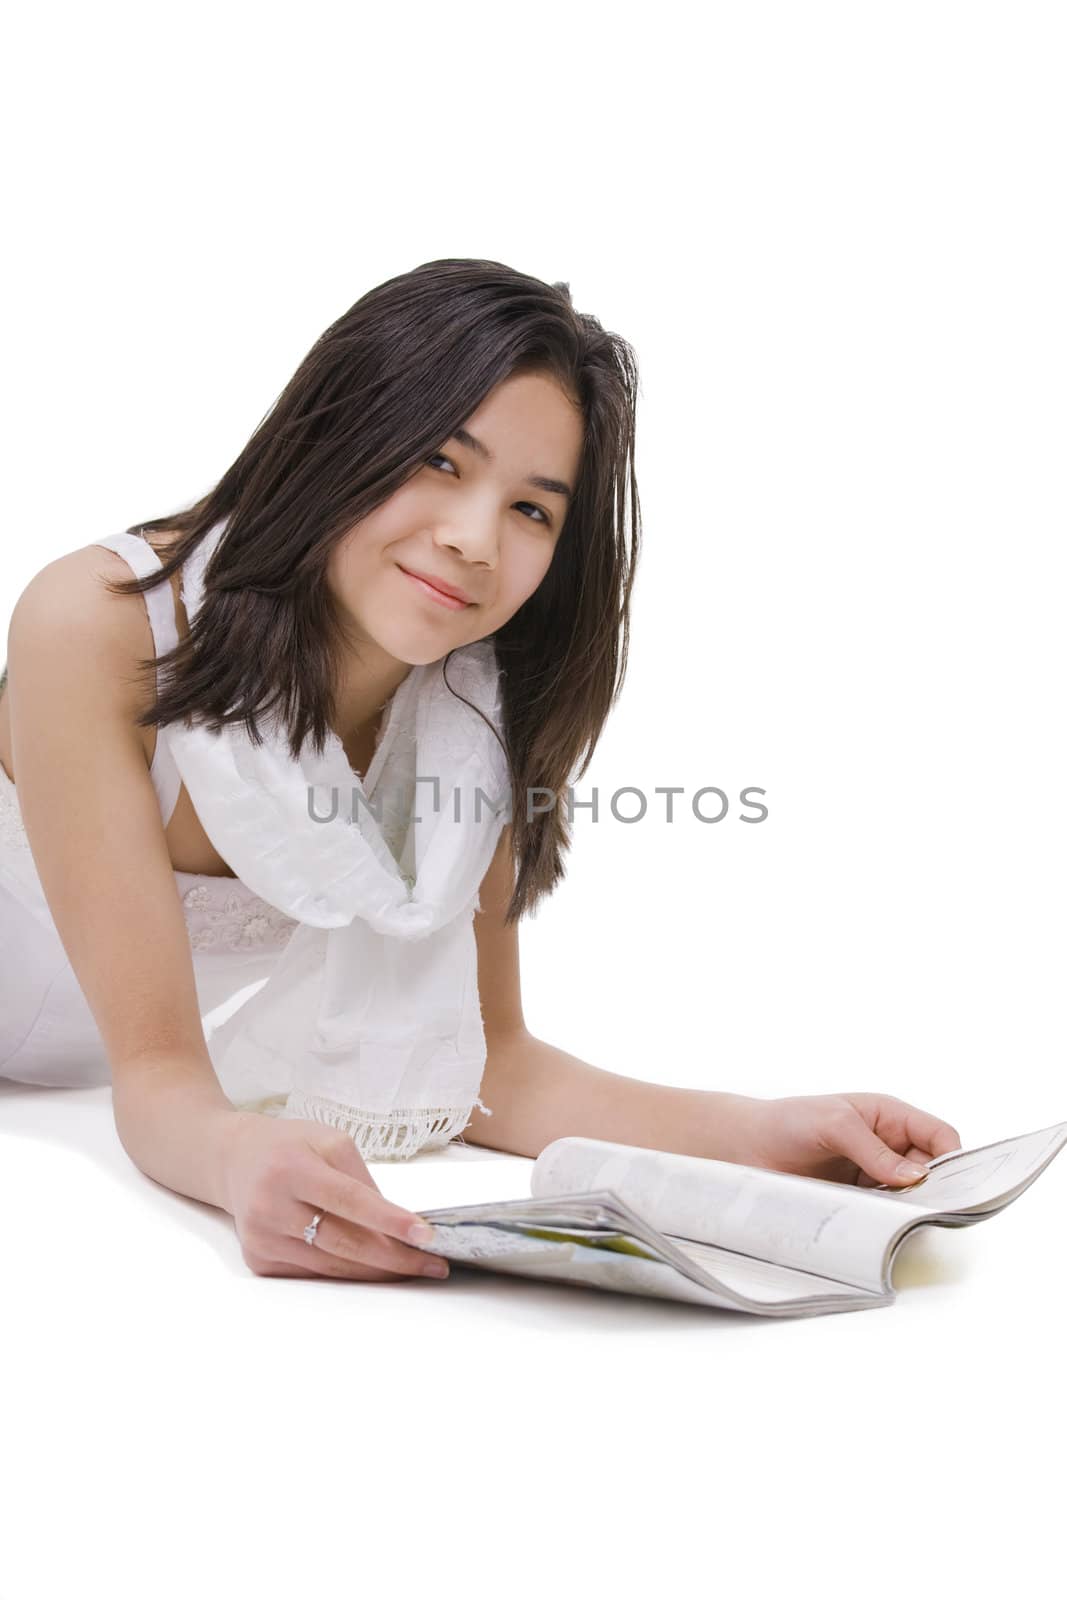 Teen girl in white dress lying down reading a magazine by jarenwicklund